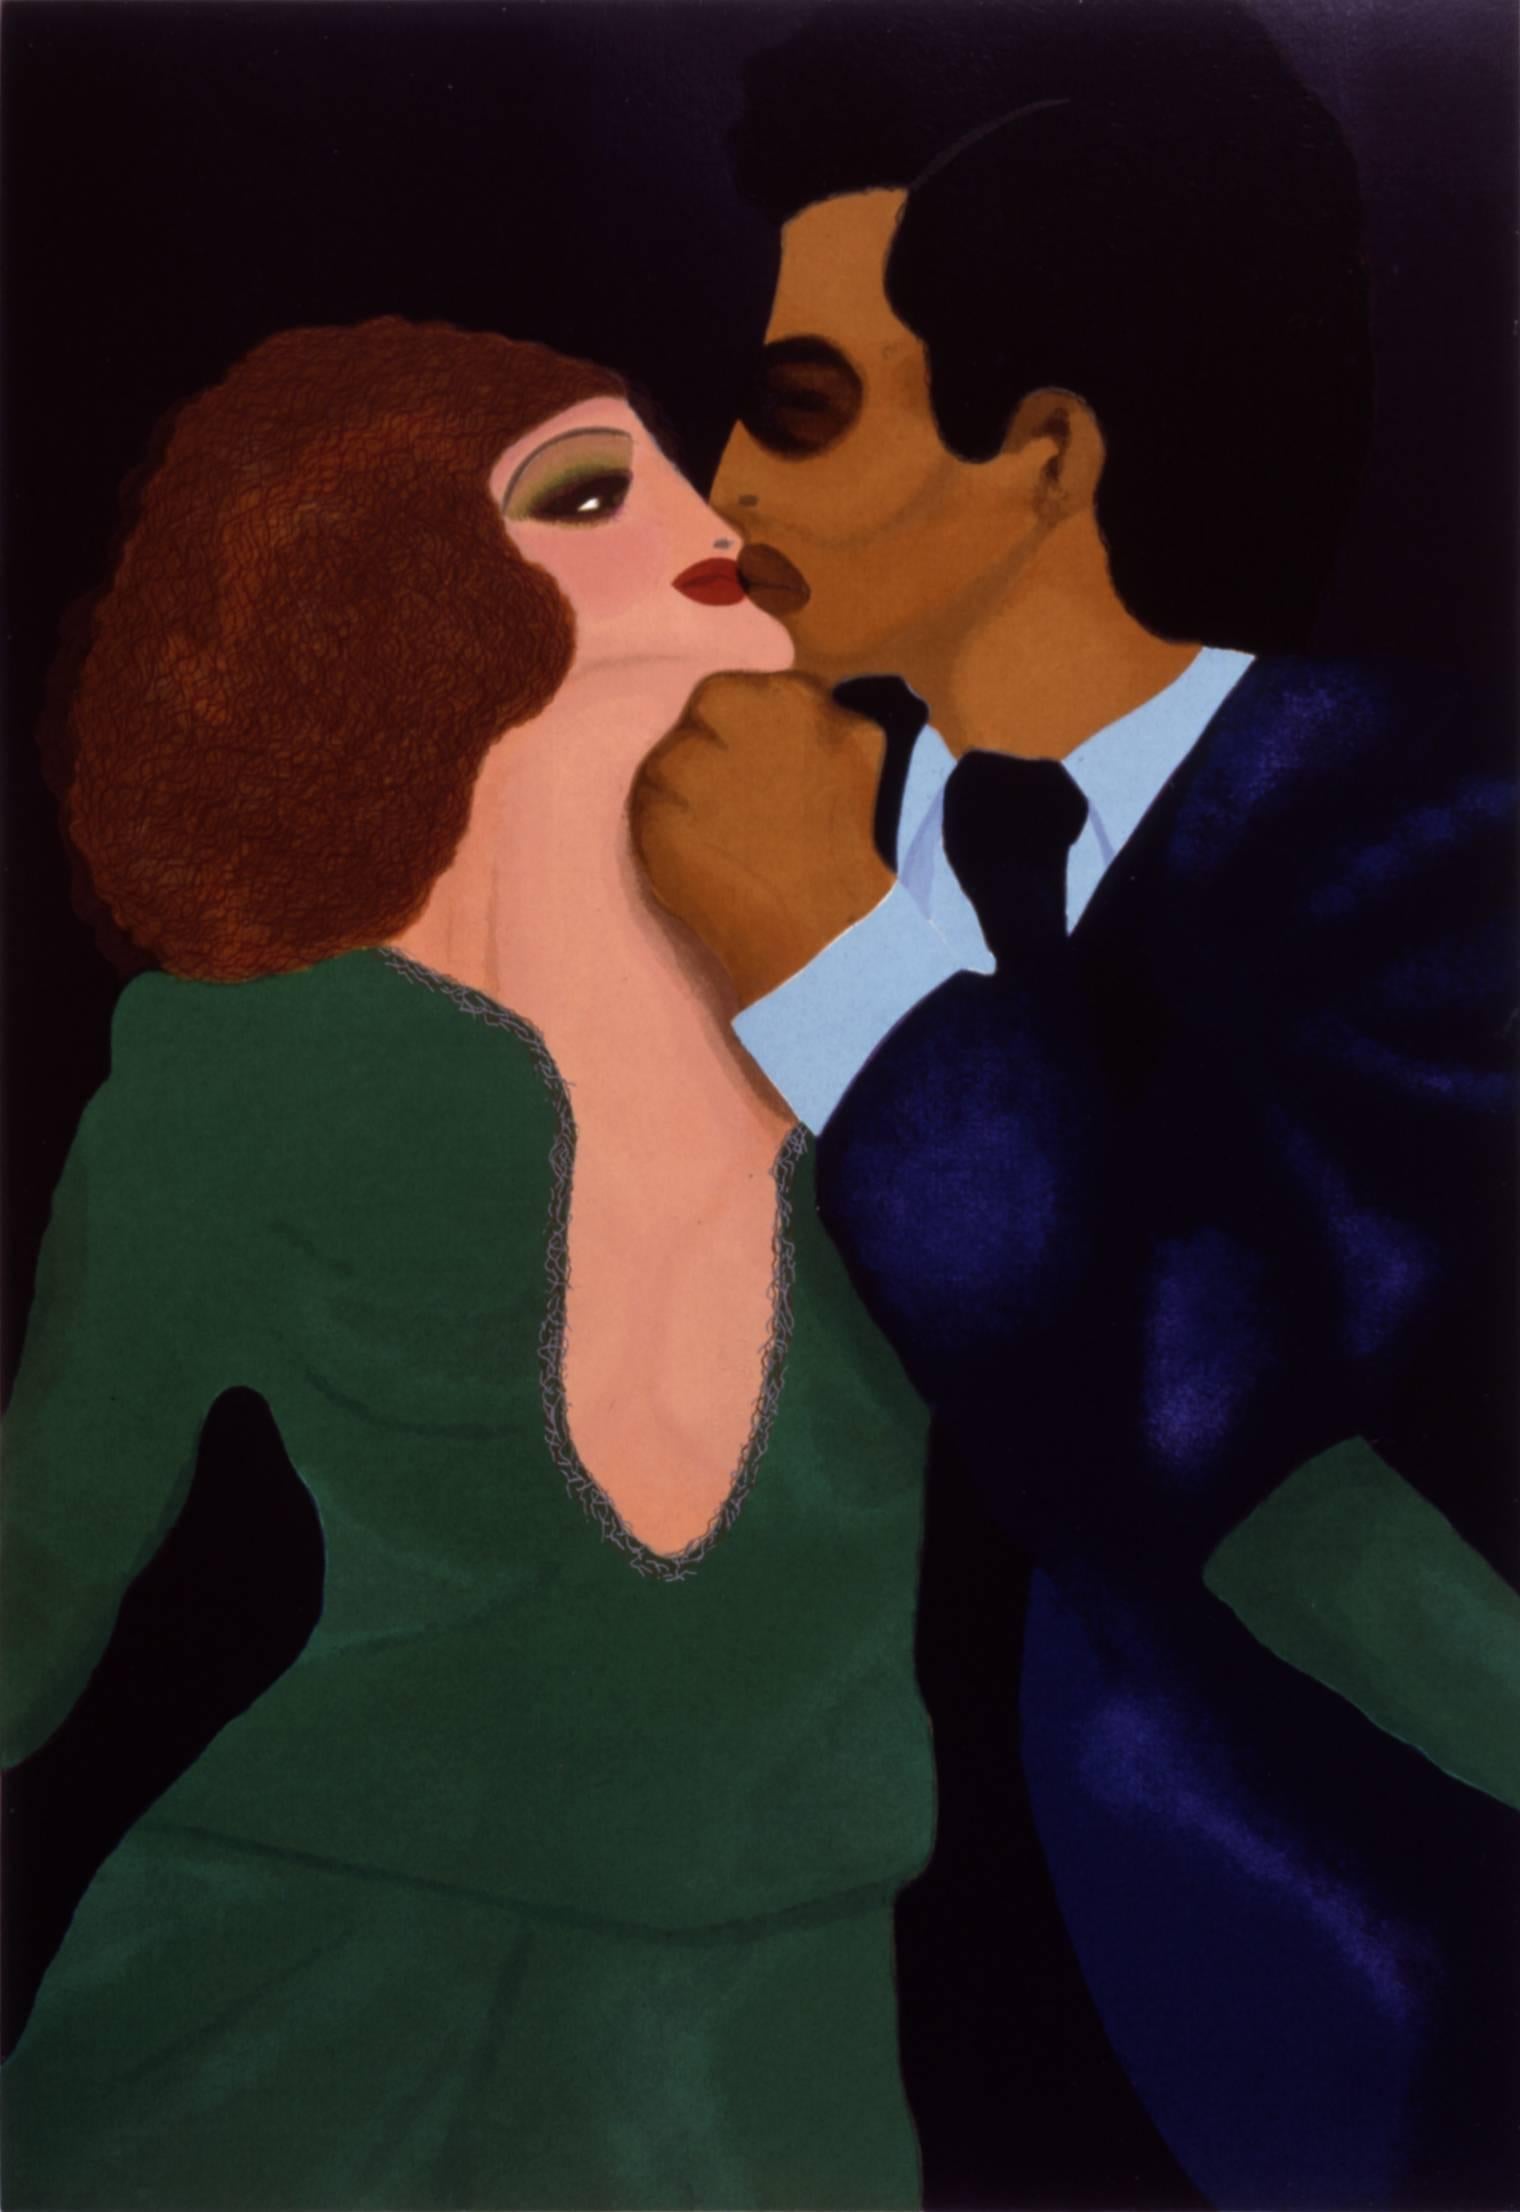 Maripaz Jaramillo Figurative Print - Cita en el Escondite (Dating in the Hideaway)